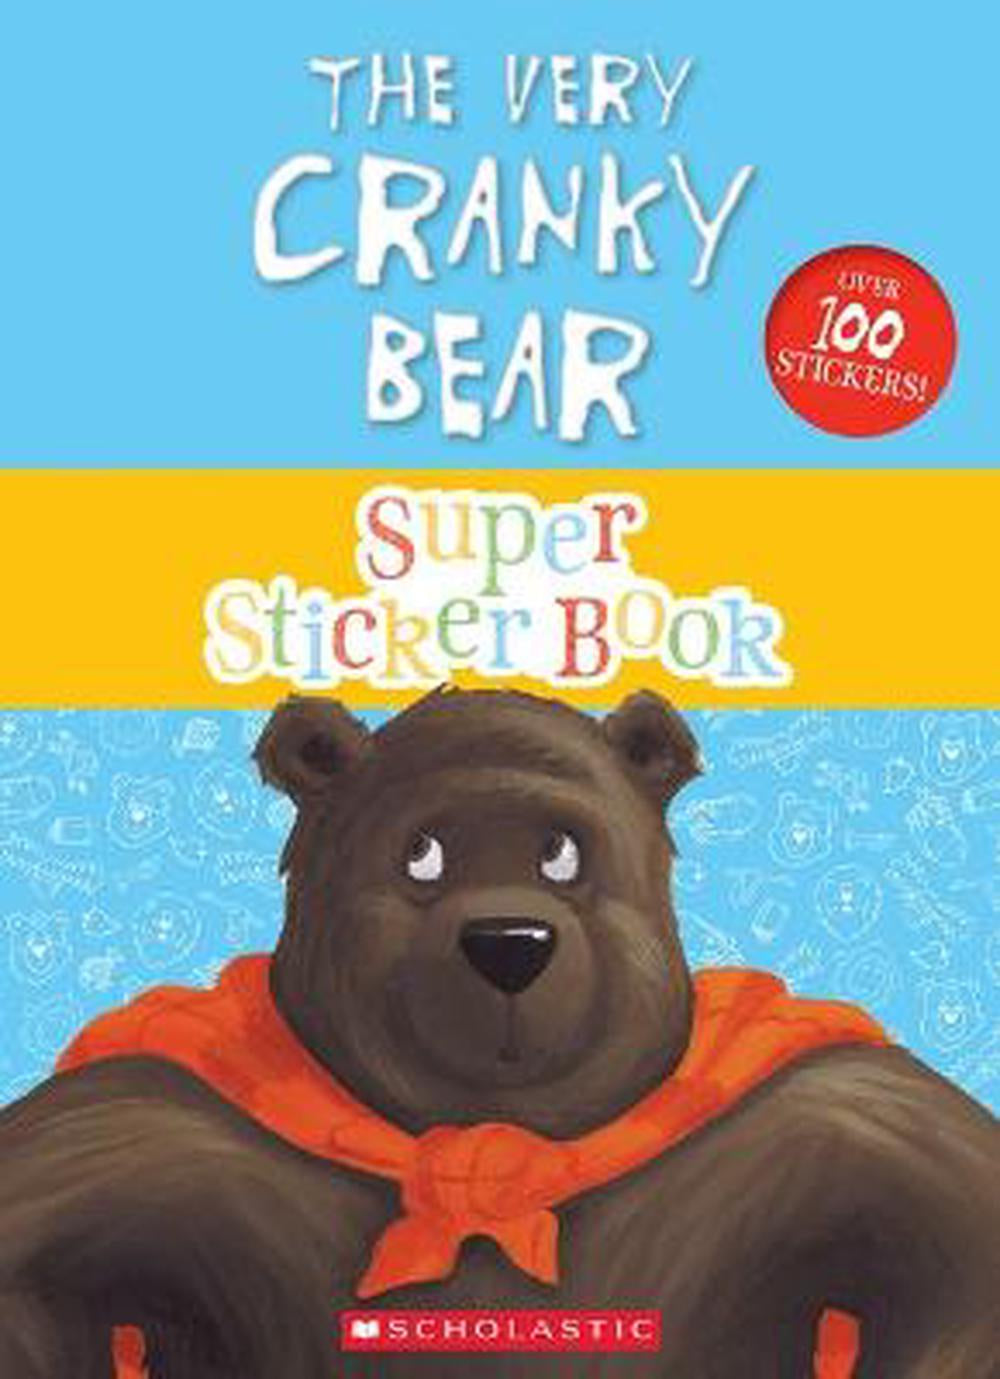 The Very Cranky Bear - Sticker Book